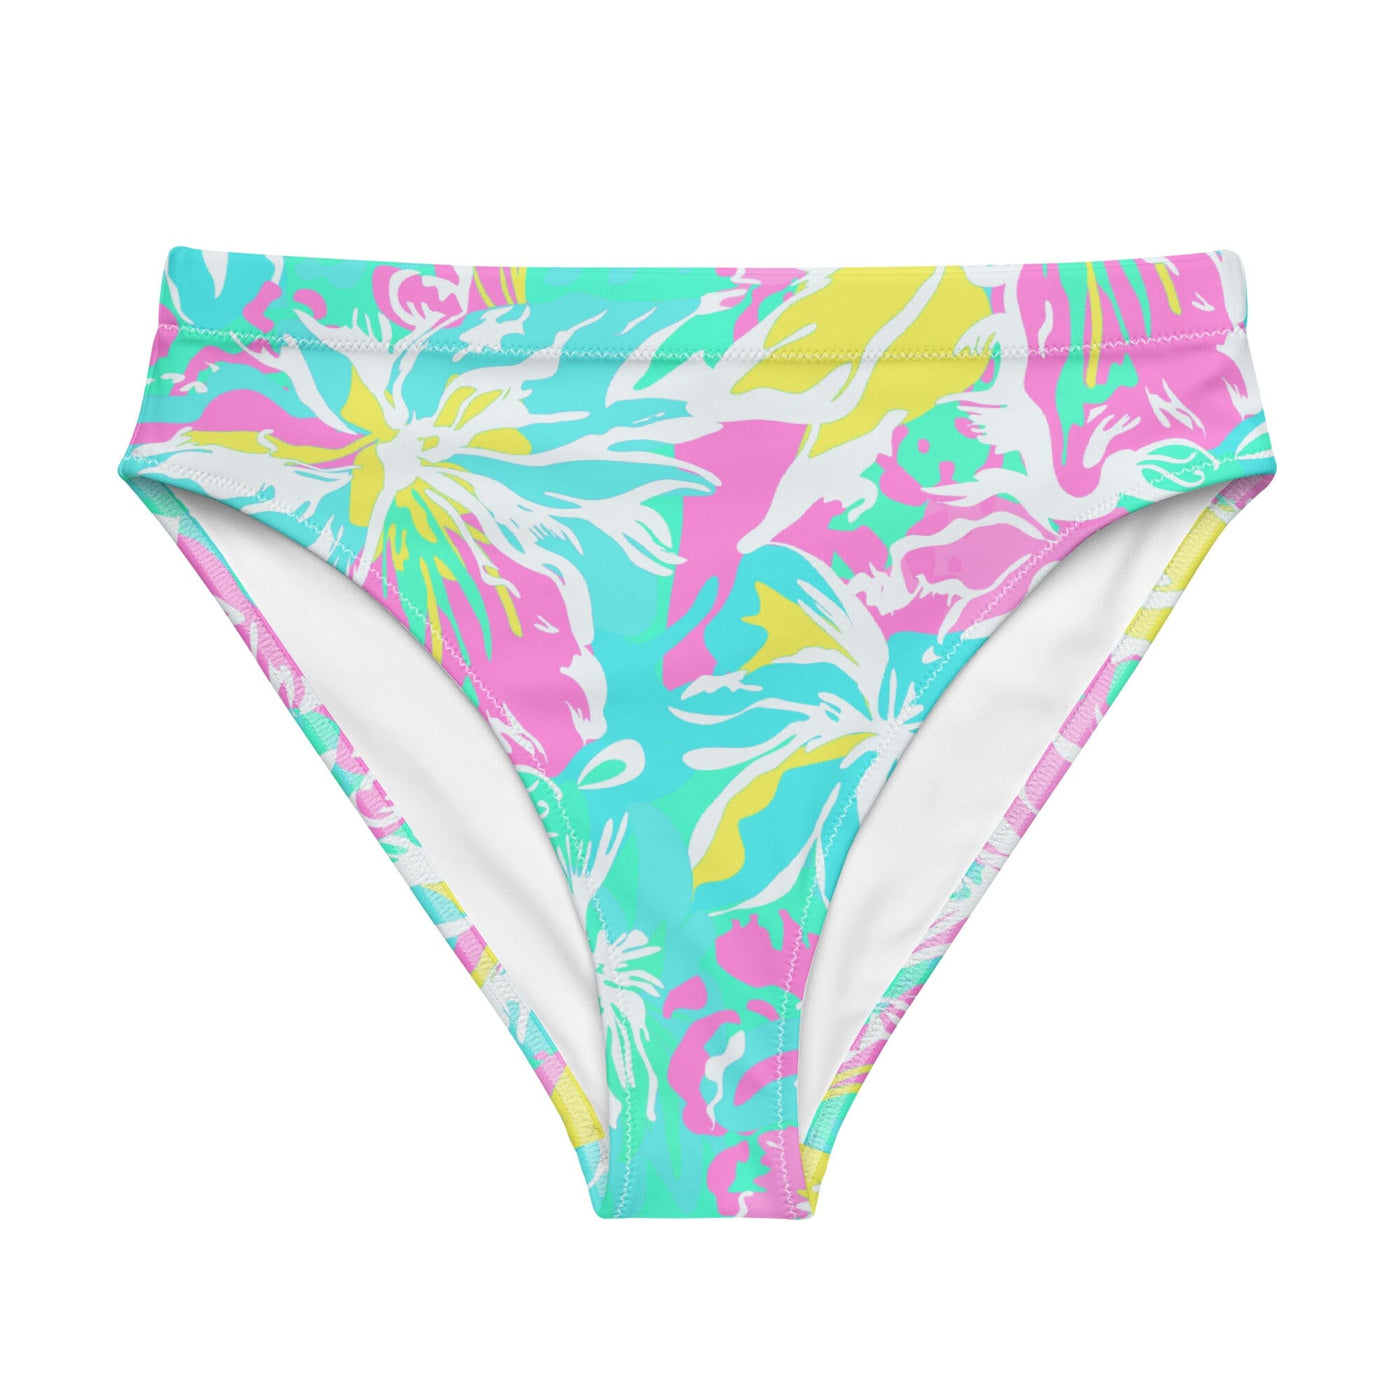 Bora Bora Light Bikini Bottom - Coastal Cool - Swimwear and Beachwear - Recycled fabrics